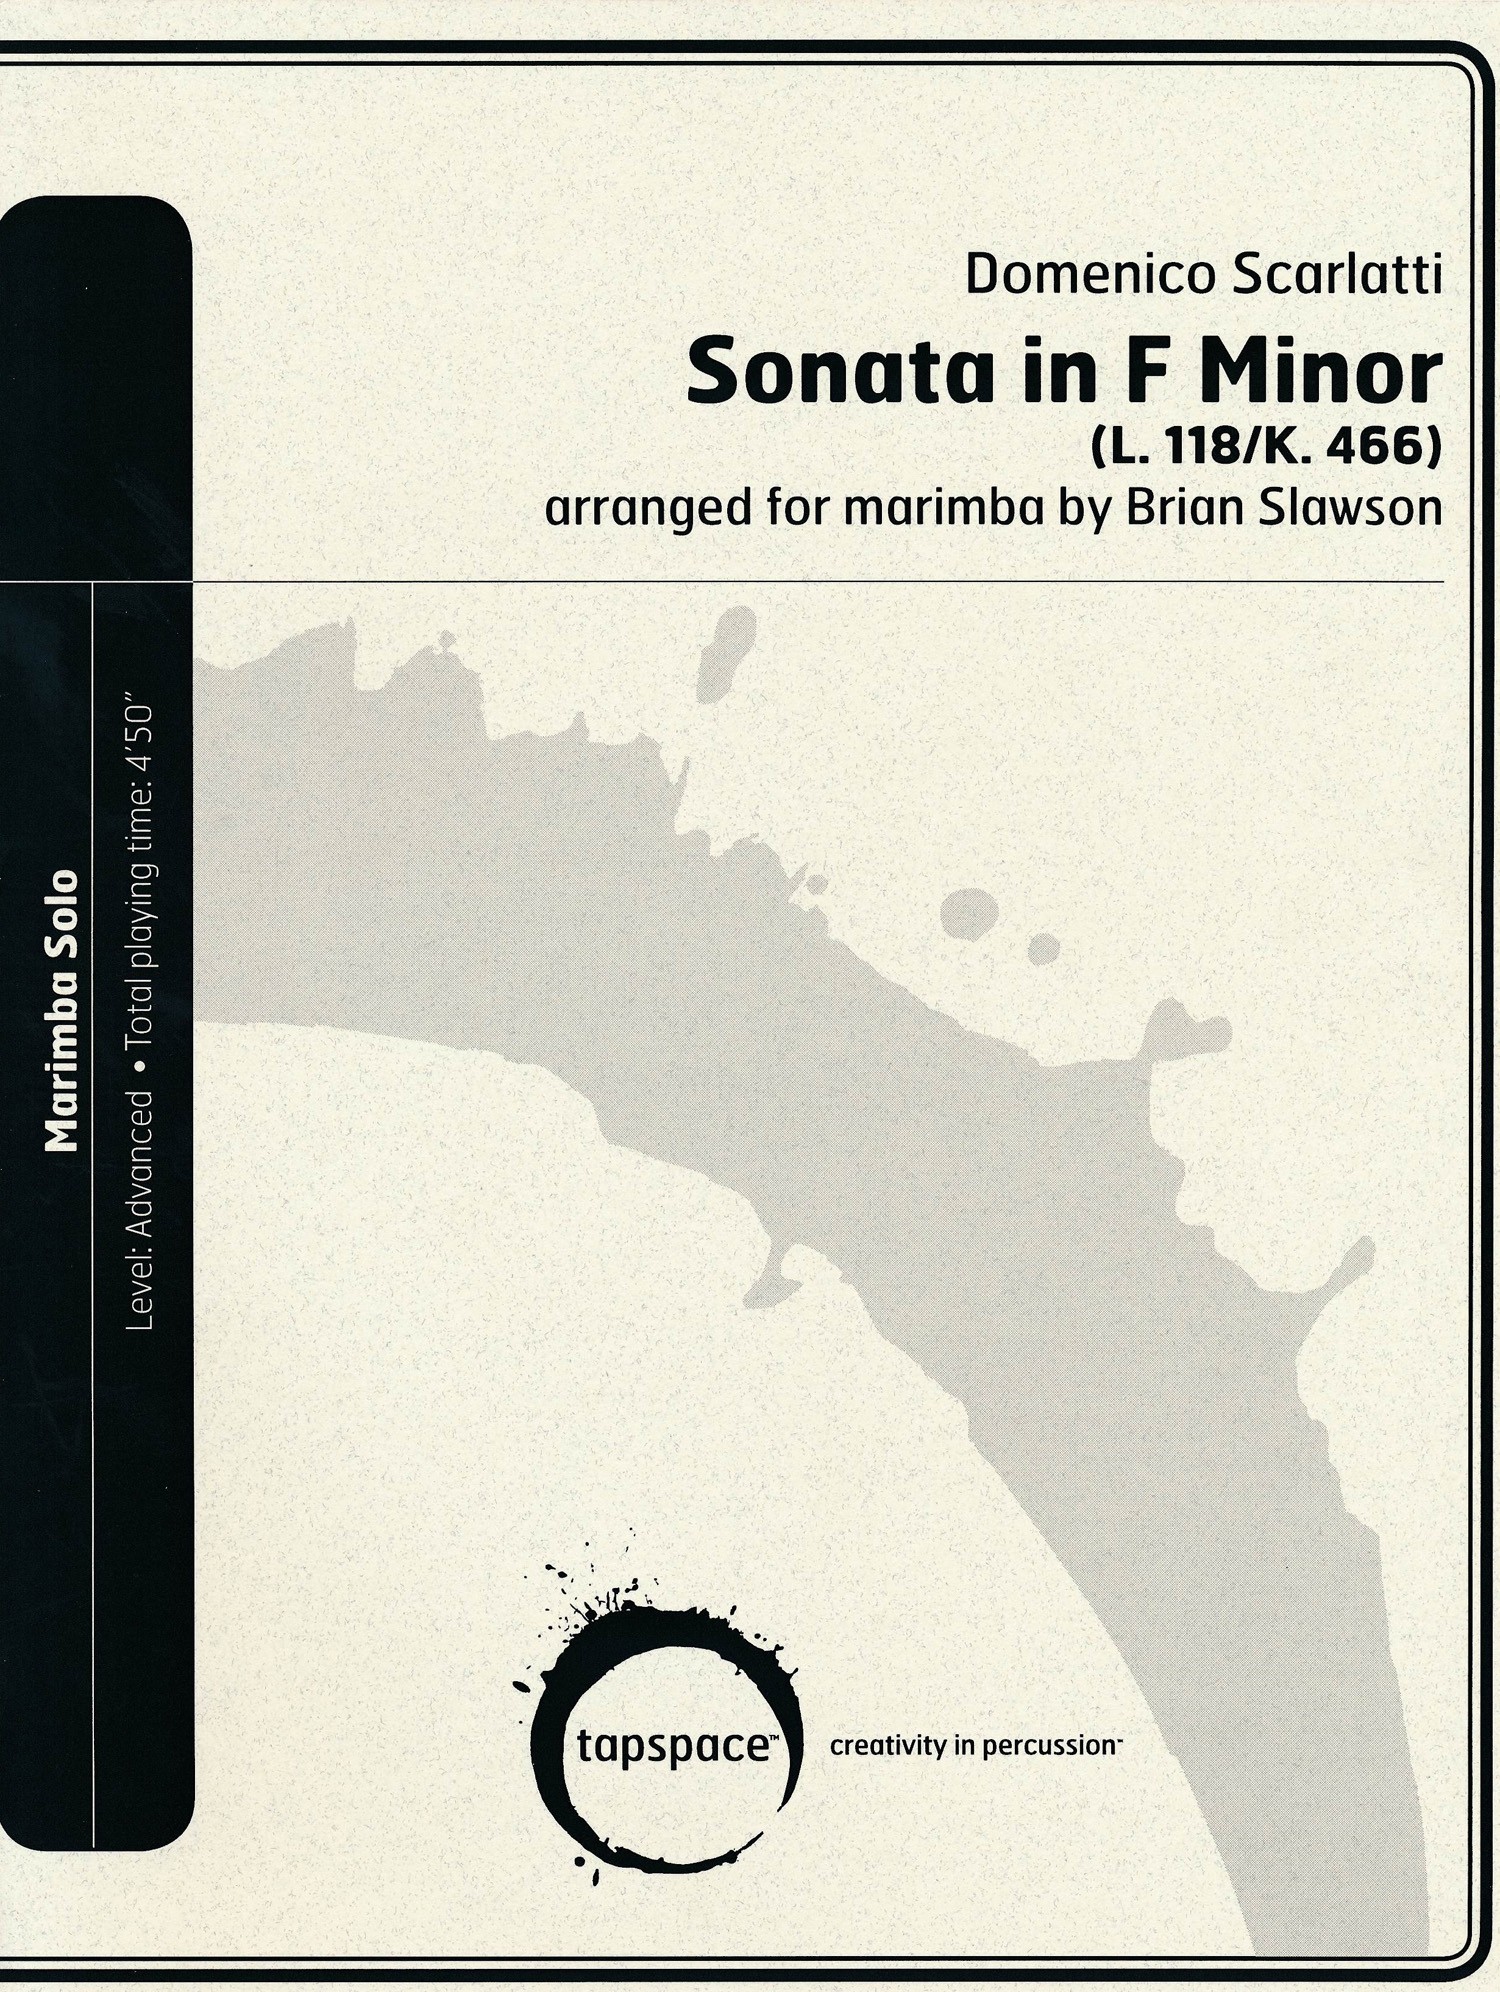 Sonata in F Minor L. 118/K. 466 by Scarlatti arr. Brian Slawson